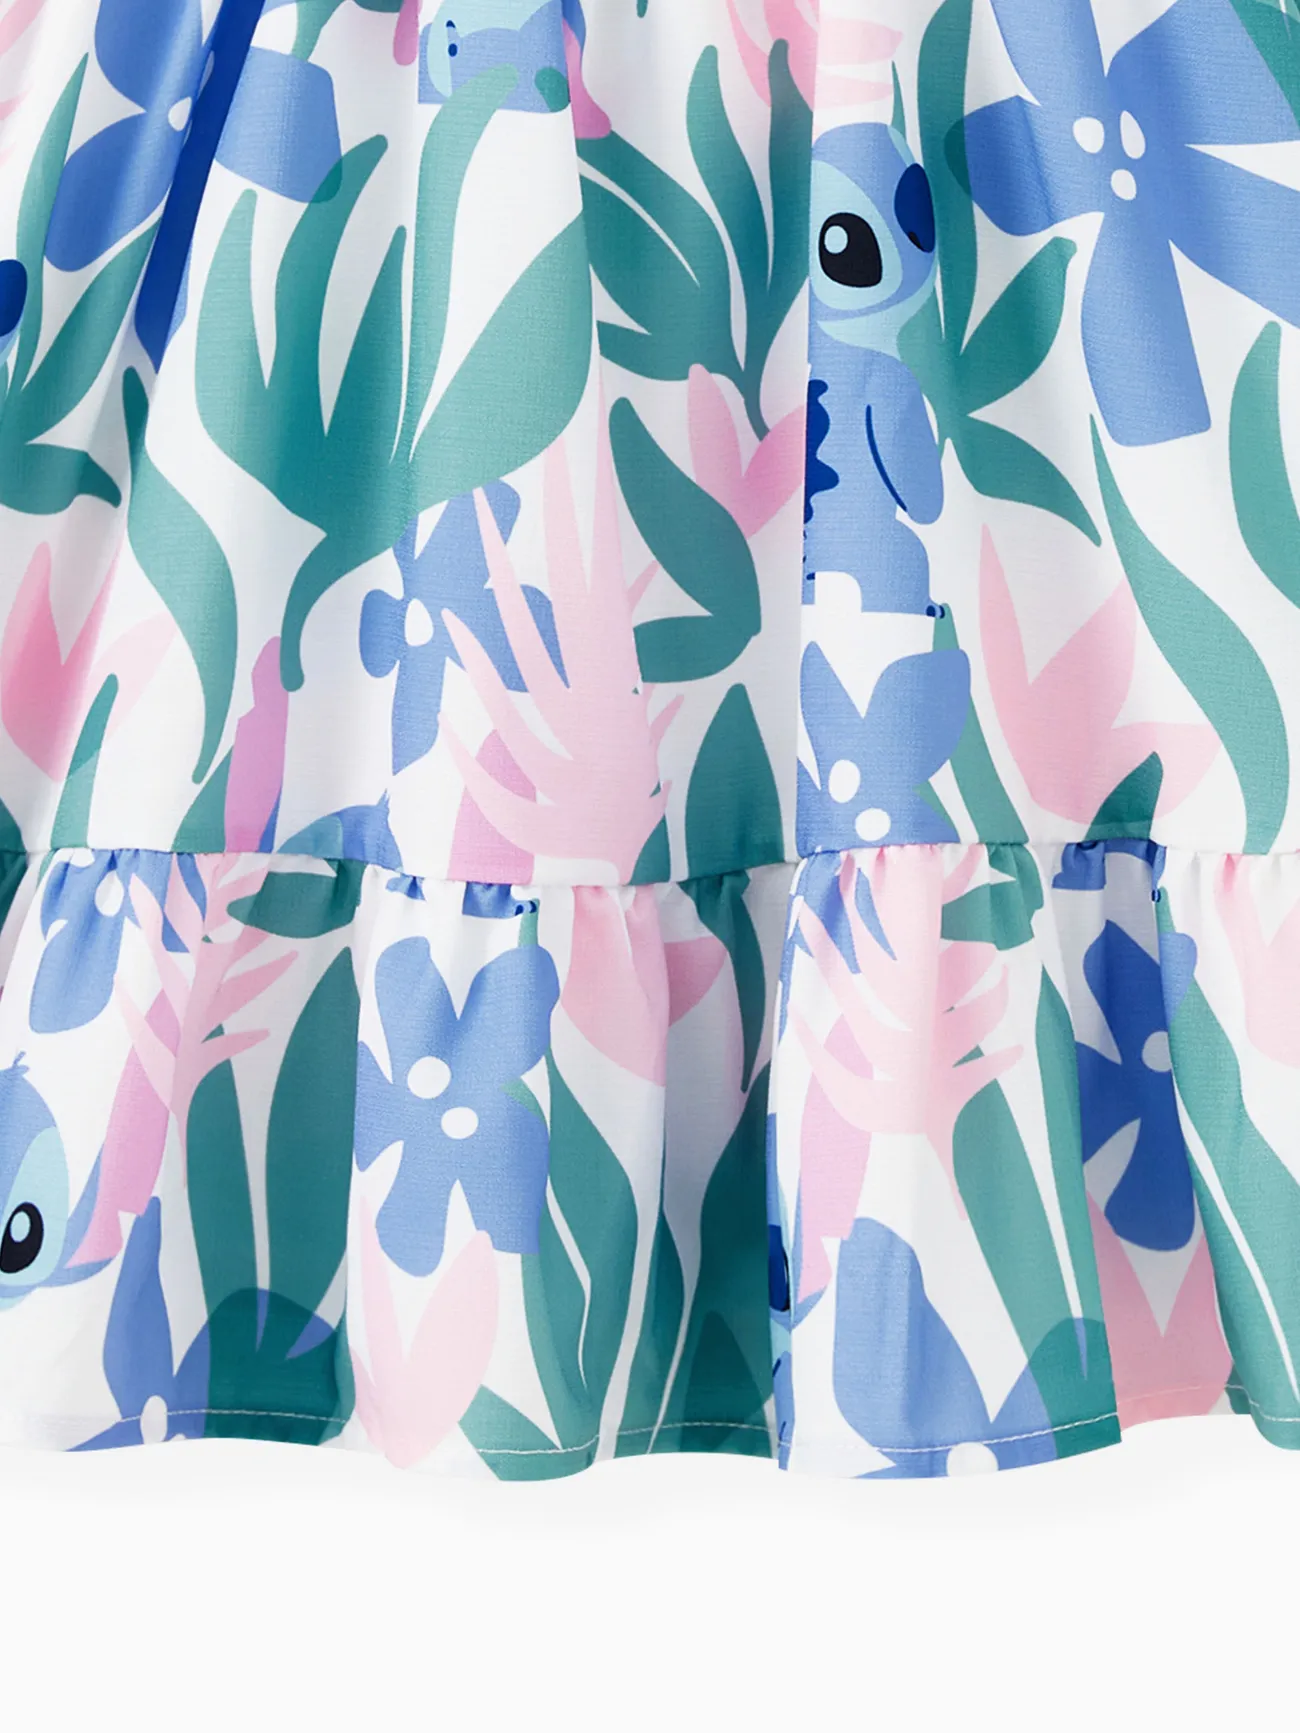 Disney Family Matching Floral Plant Stitch Print Tee/Ruffle-sleeve Dress Green big image 1